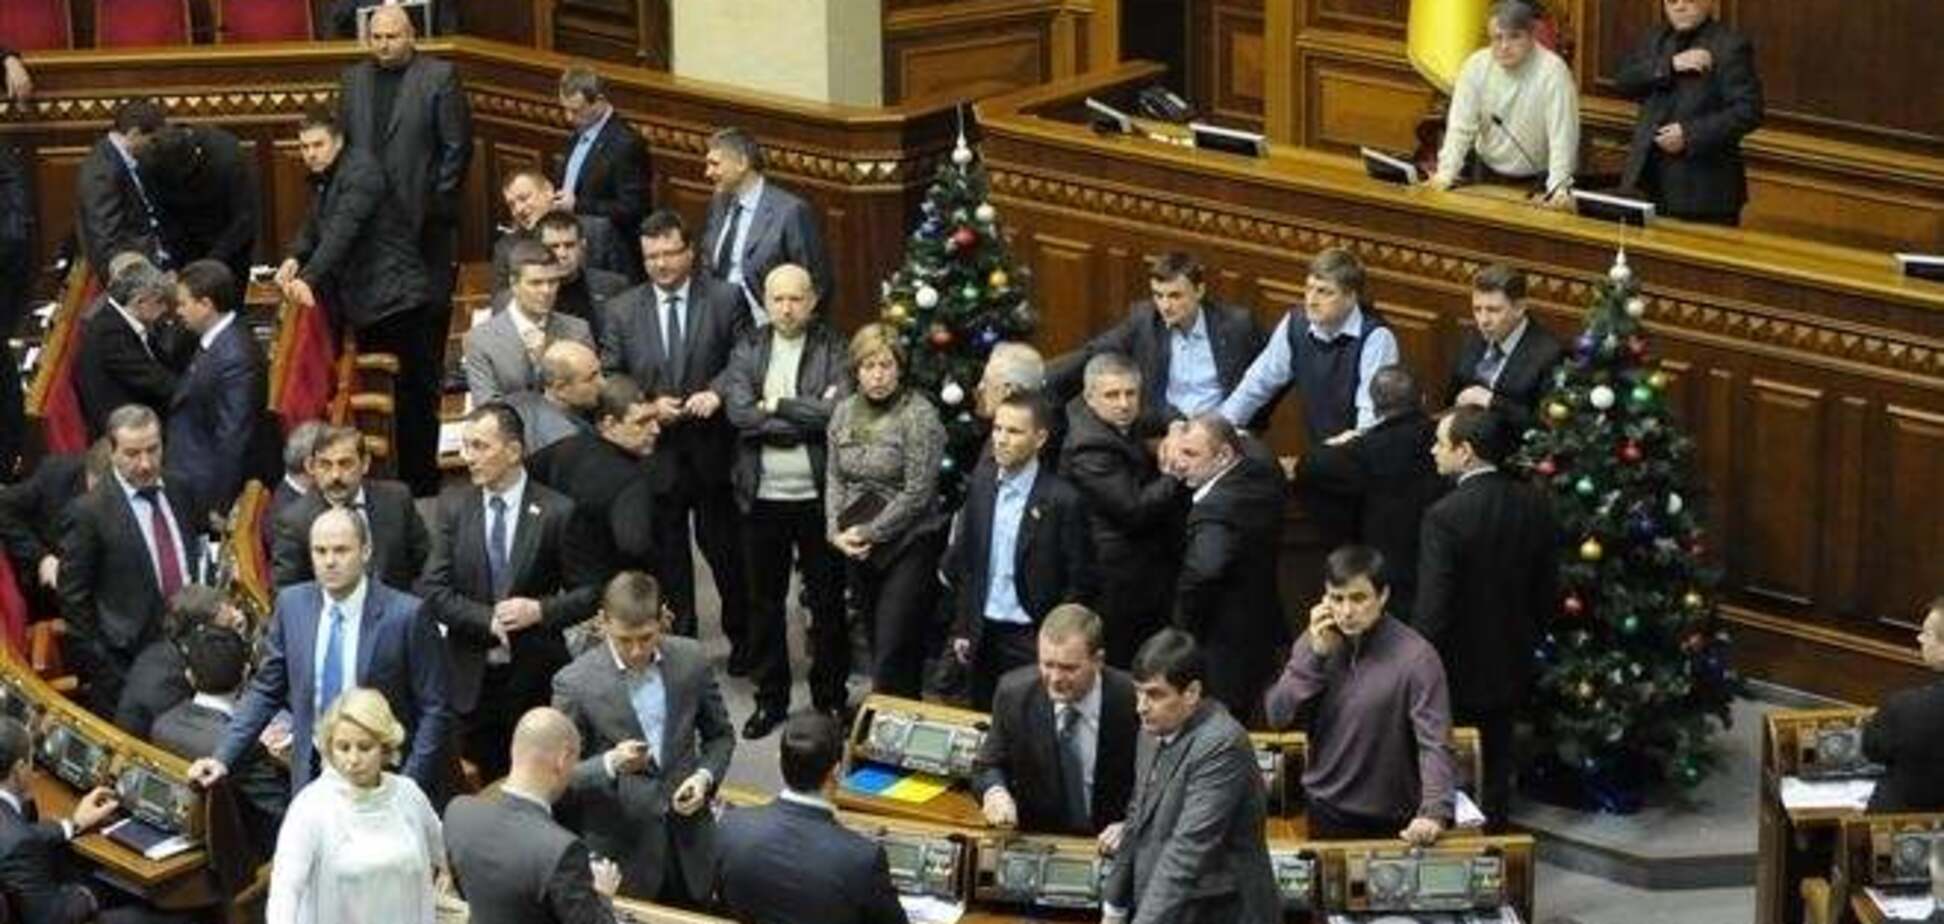 Законы от 16 января утратили силу 2 февраля – Минюст